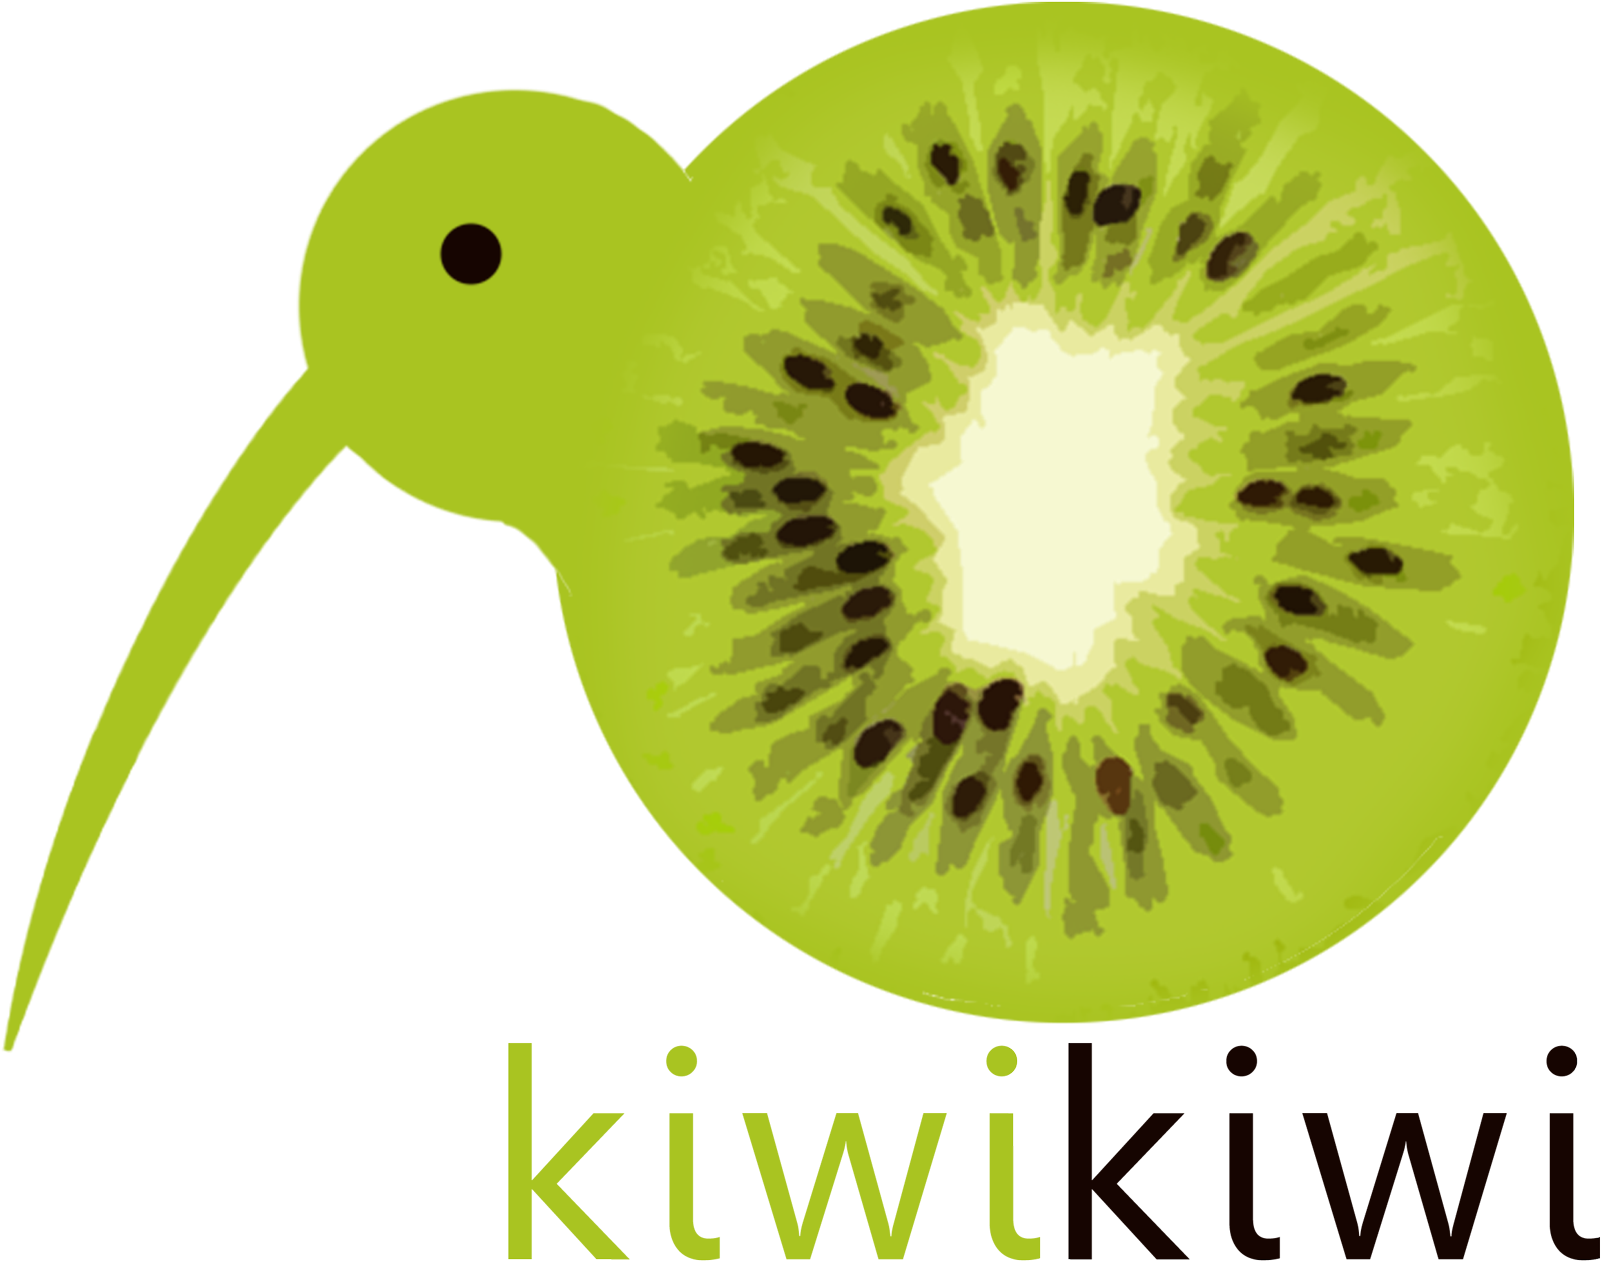 A Kiwi Fruit Cut In Half